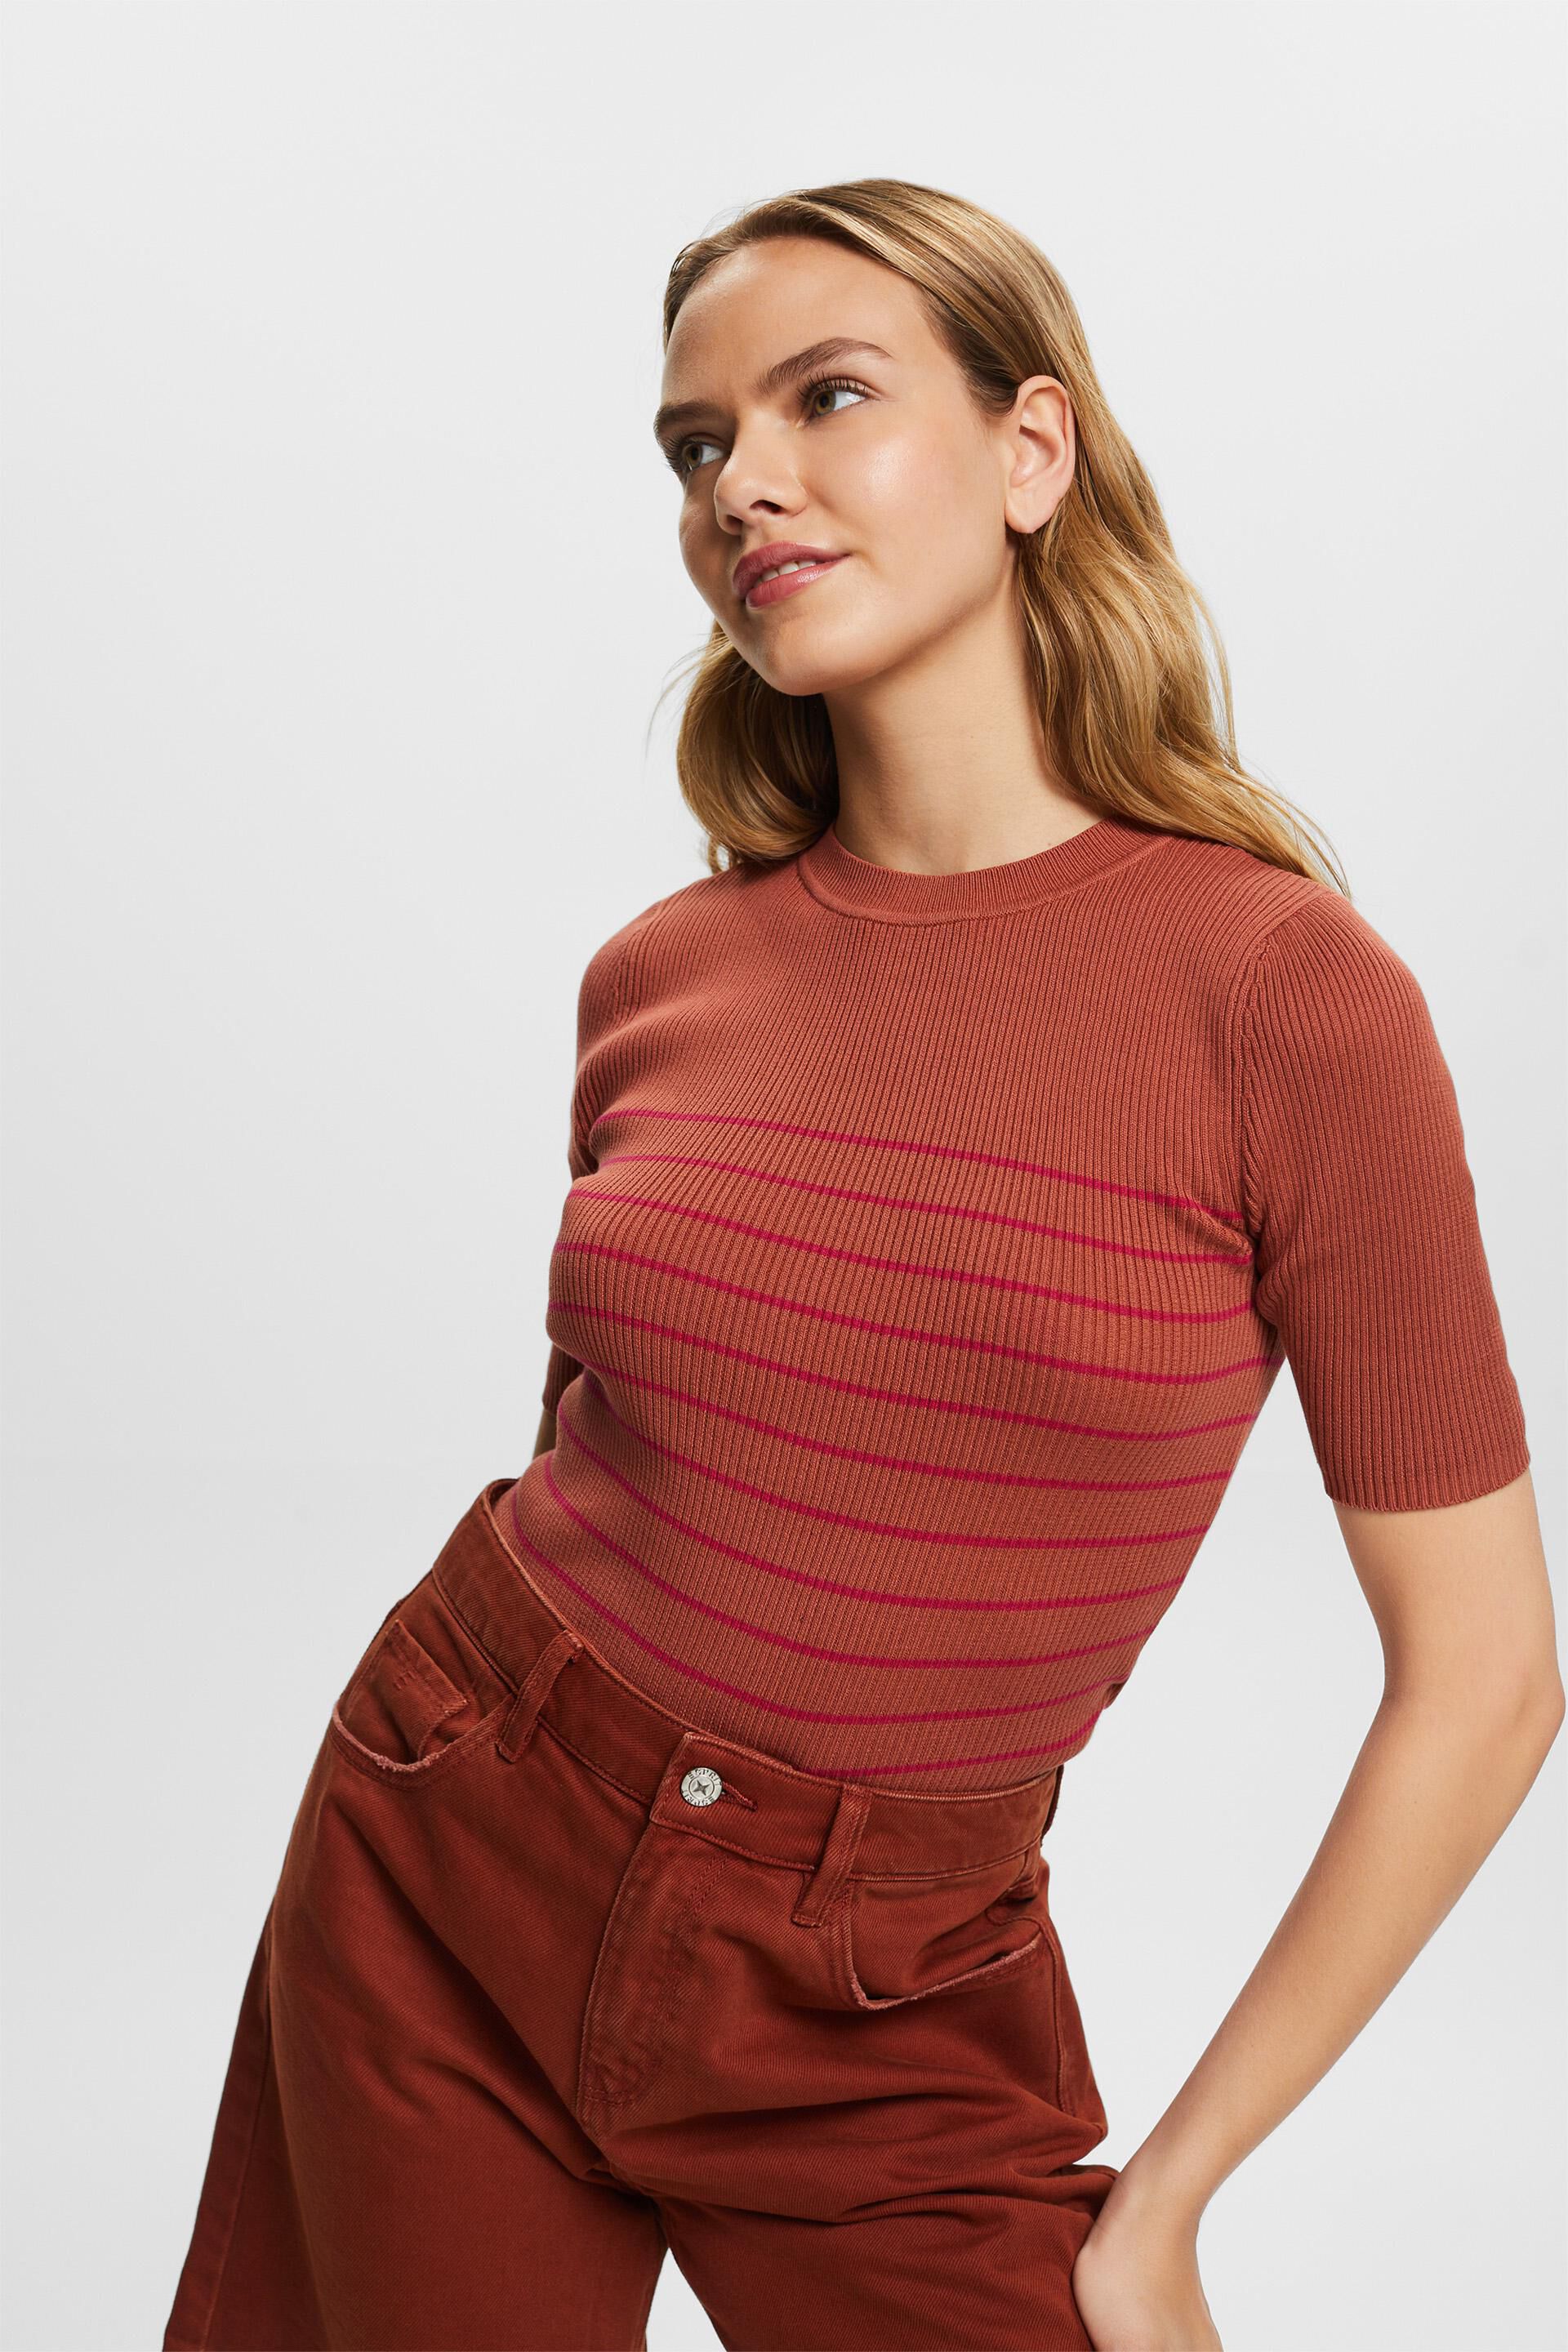 Esprit stripes, cotton sleeve Short 100% jumper with